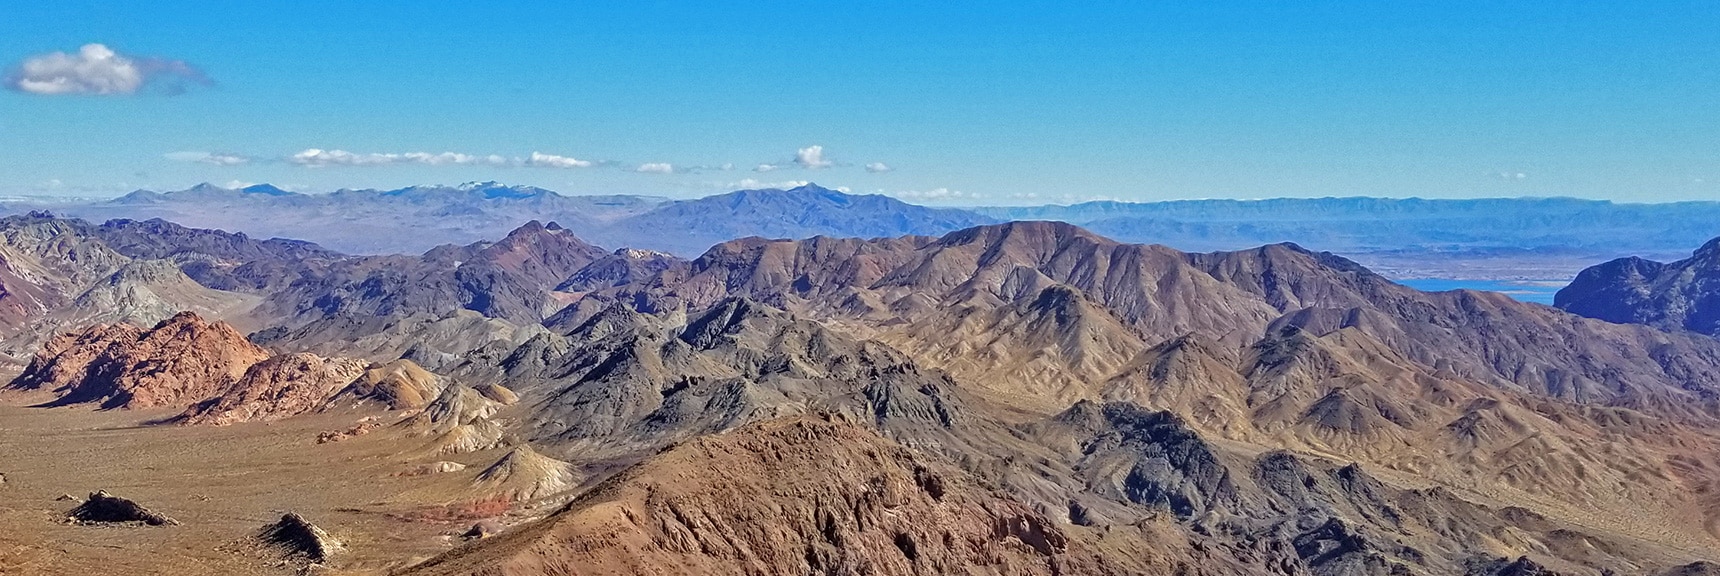 Virgin Mts?, Jimbilnan Wilderness? in Far Background | Hamblin Mountain, Lake Mead National Conservation Area, Nevada